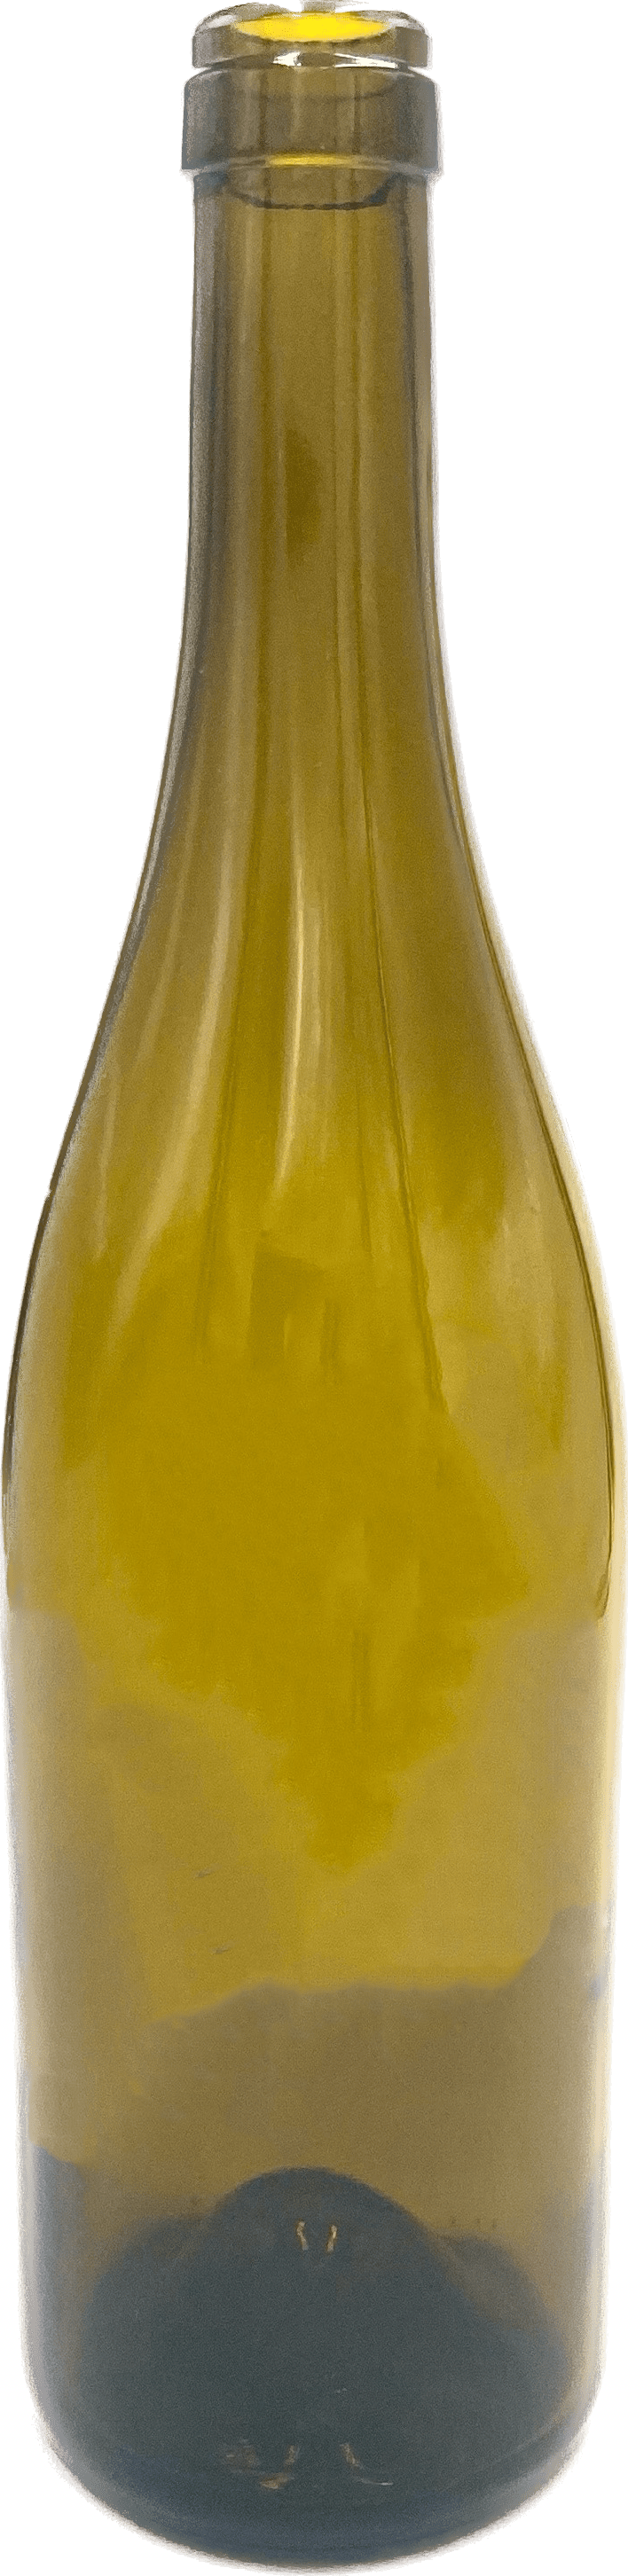 750 ml Burgunder Tradition